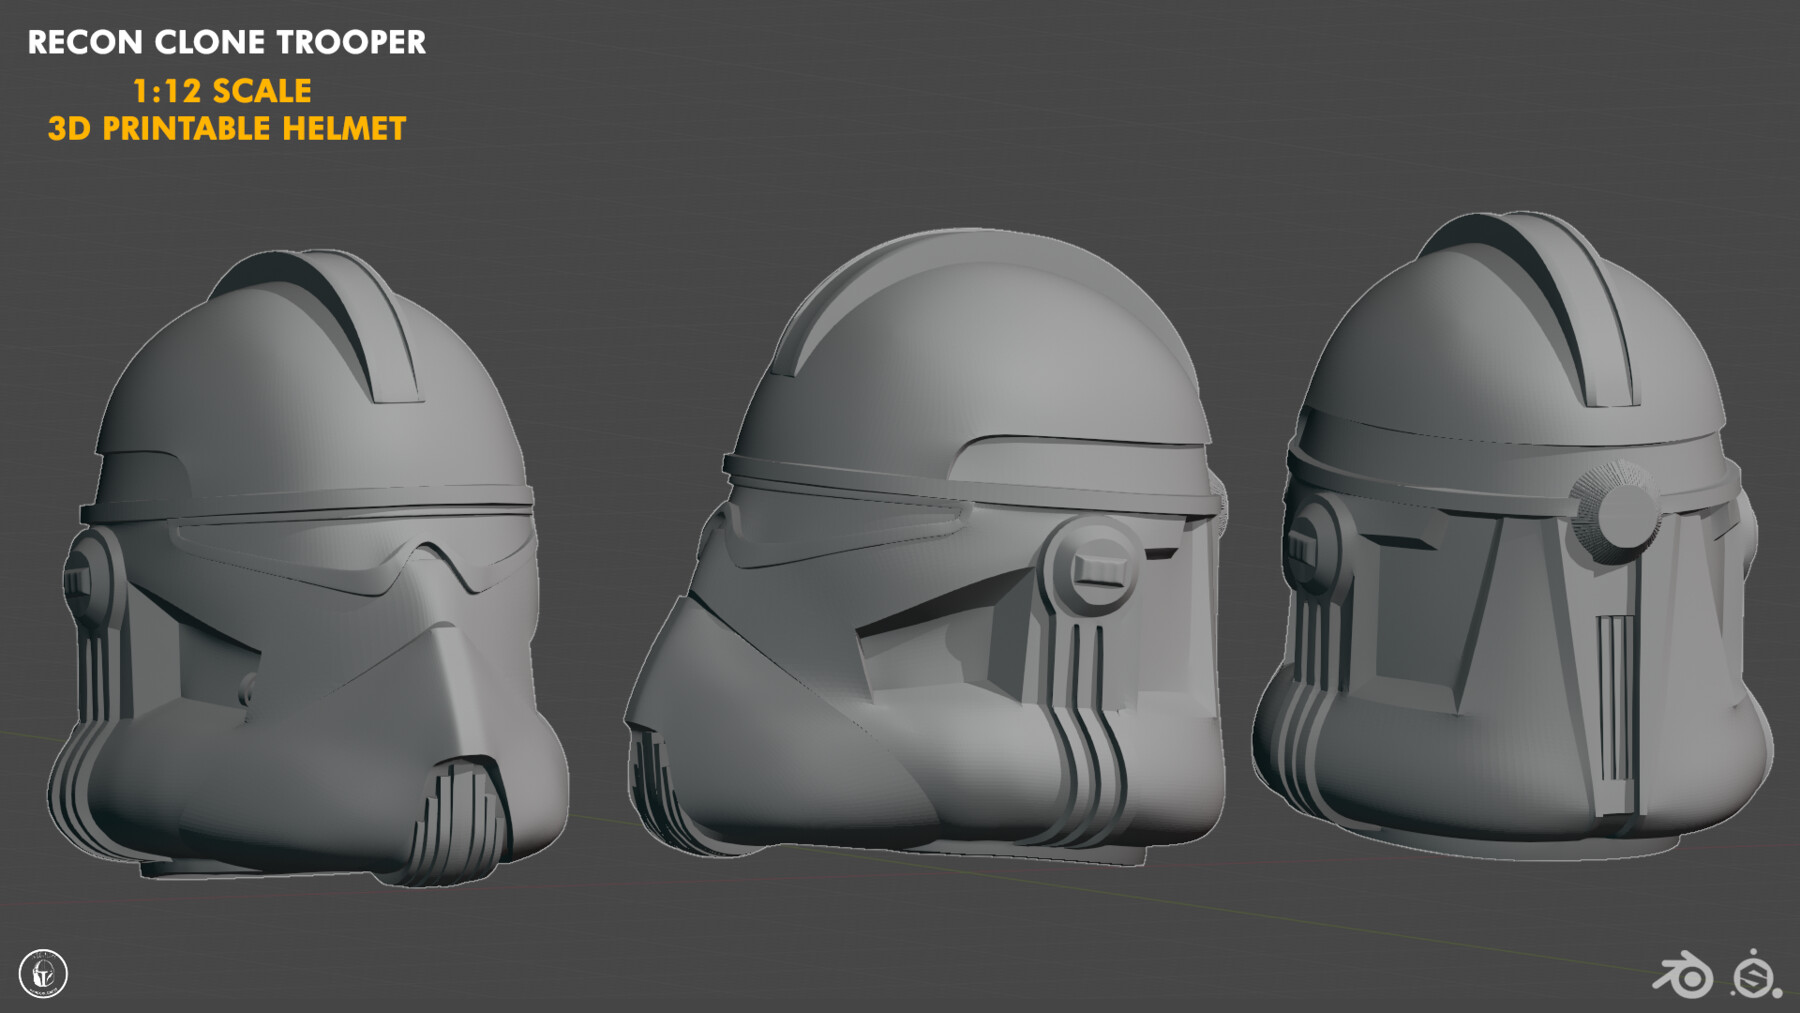 ArtStation - RECON Clone Trooper 3D printable helmet 1:12 scale | Resources